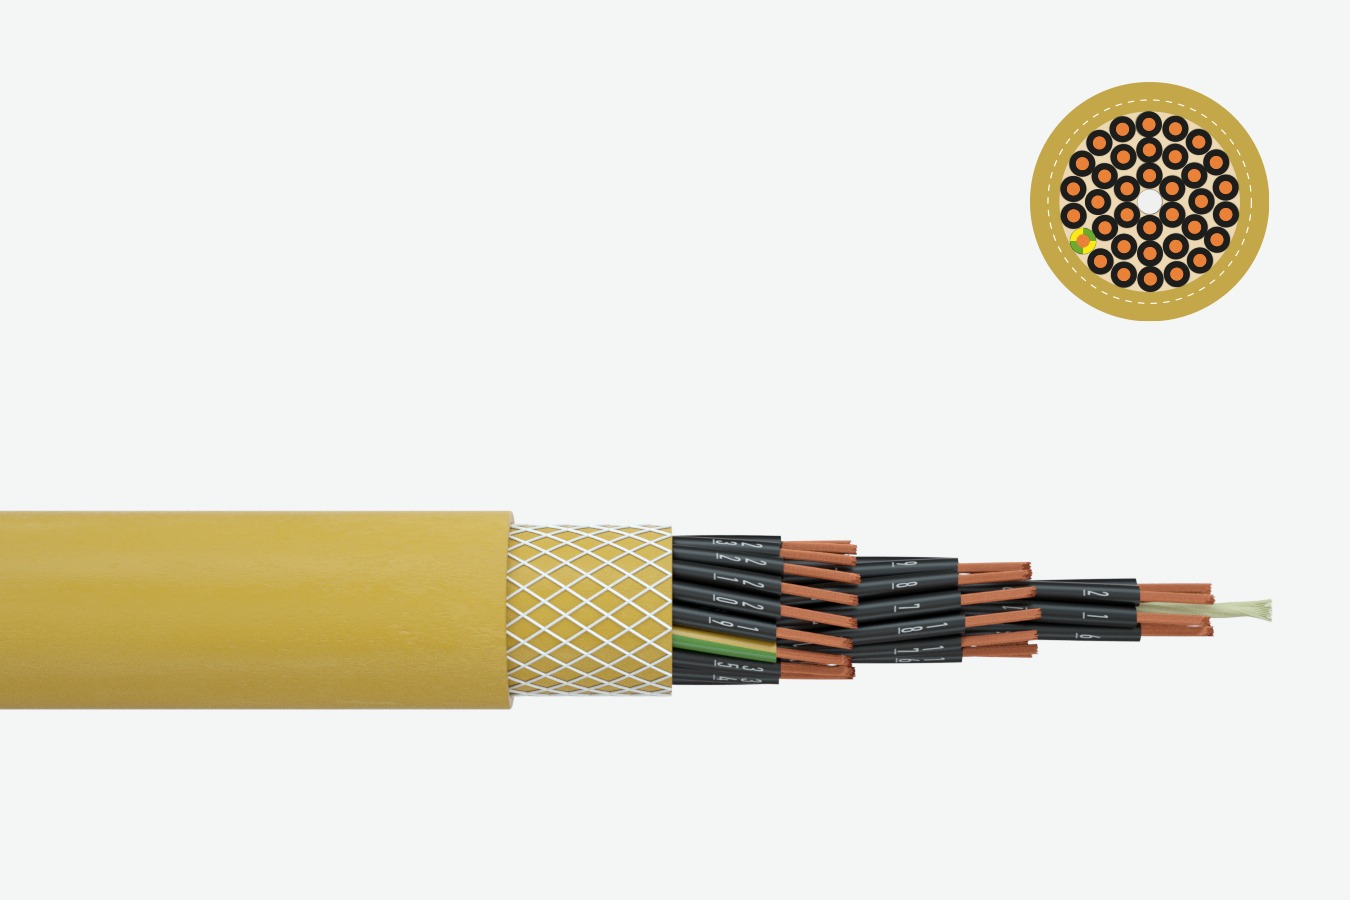 Rubber reeling cable Cordaflex® (N)SHTOEU (SMK)-V-S